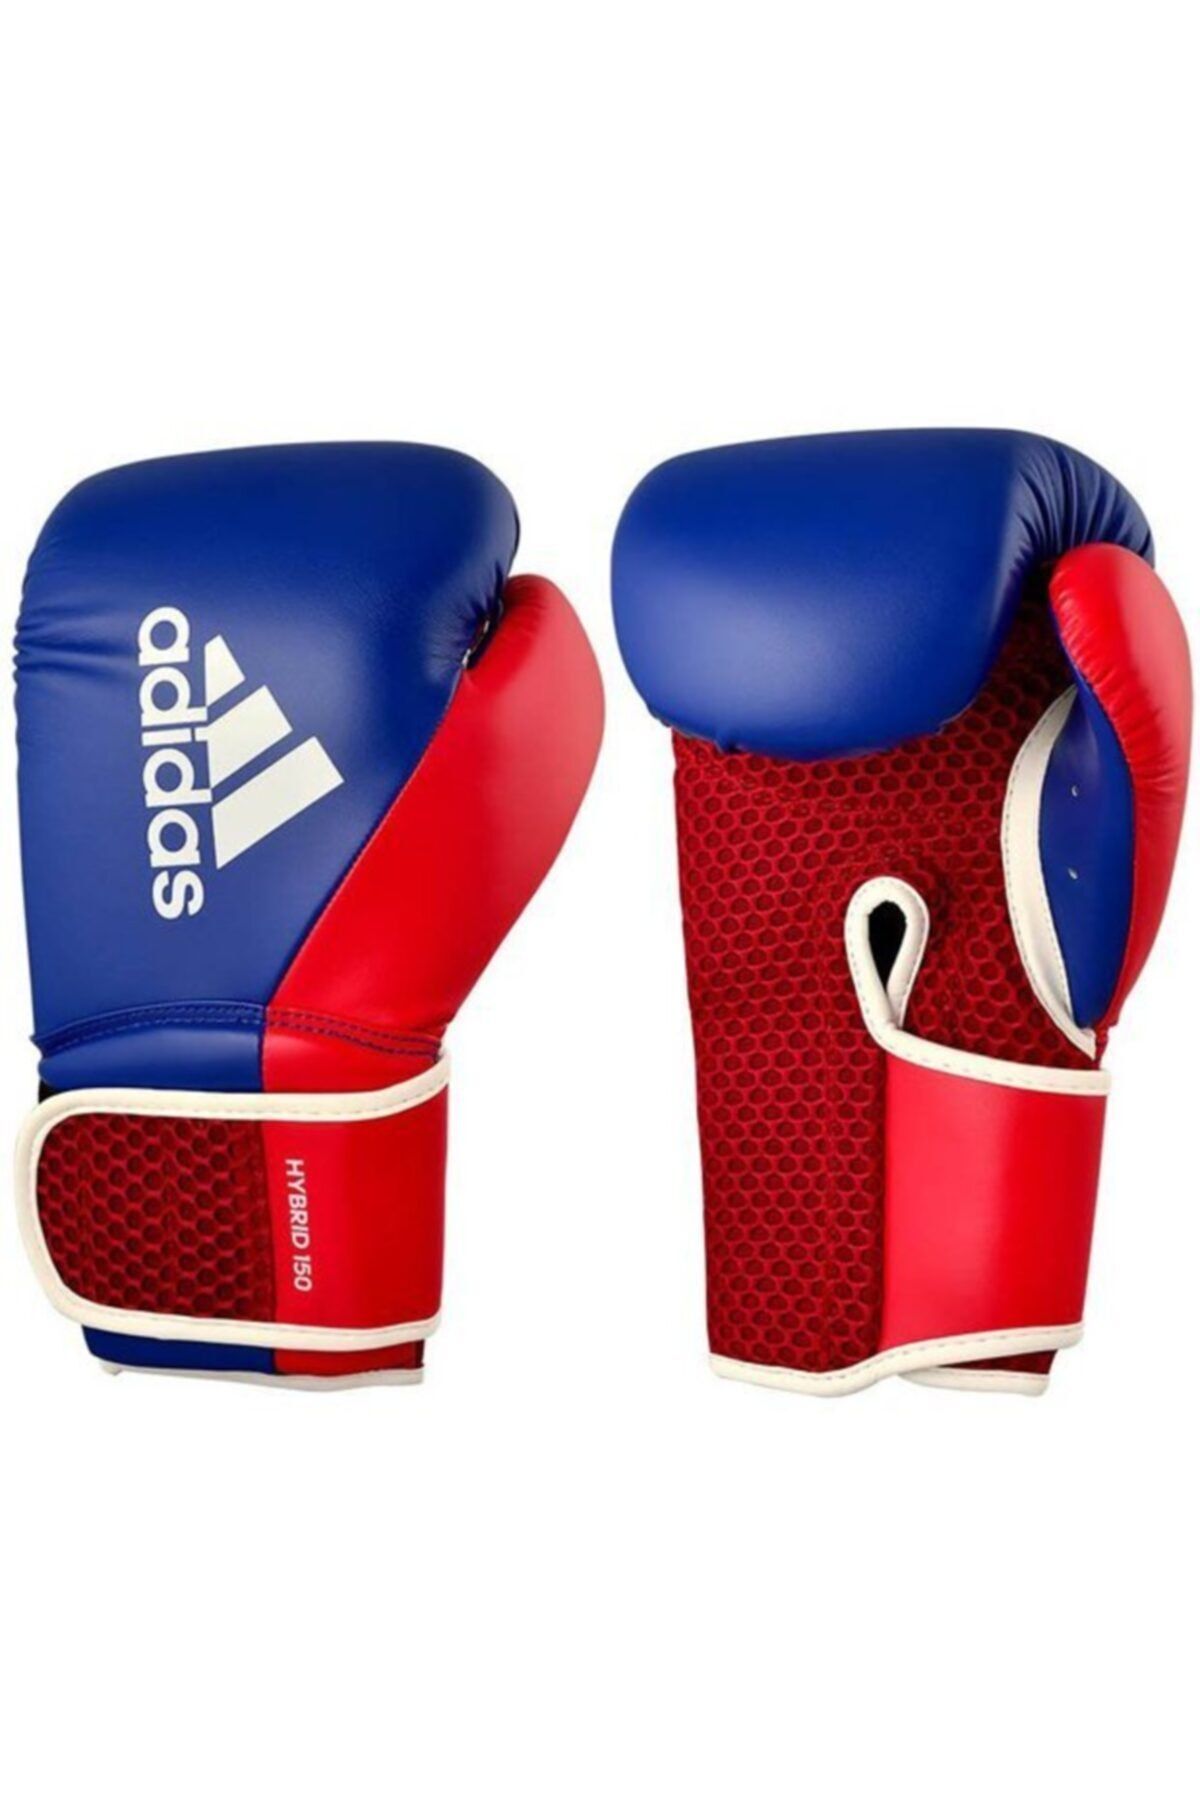 adidas Adıh150tg Hybrid150 Boks Eldiveni Boxing Gloves